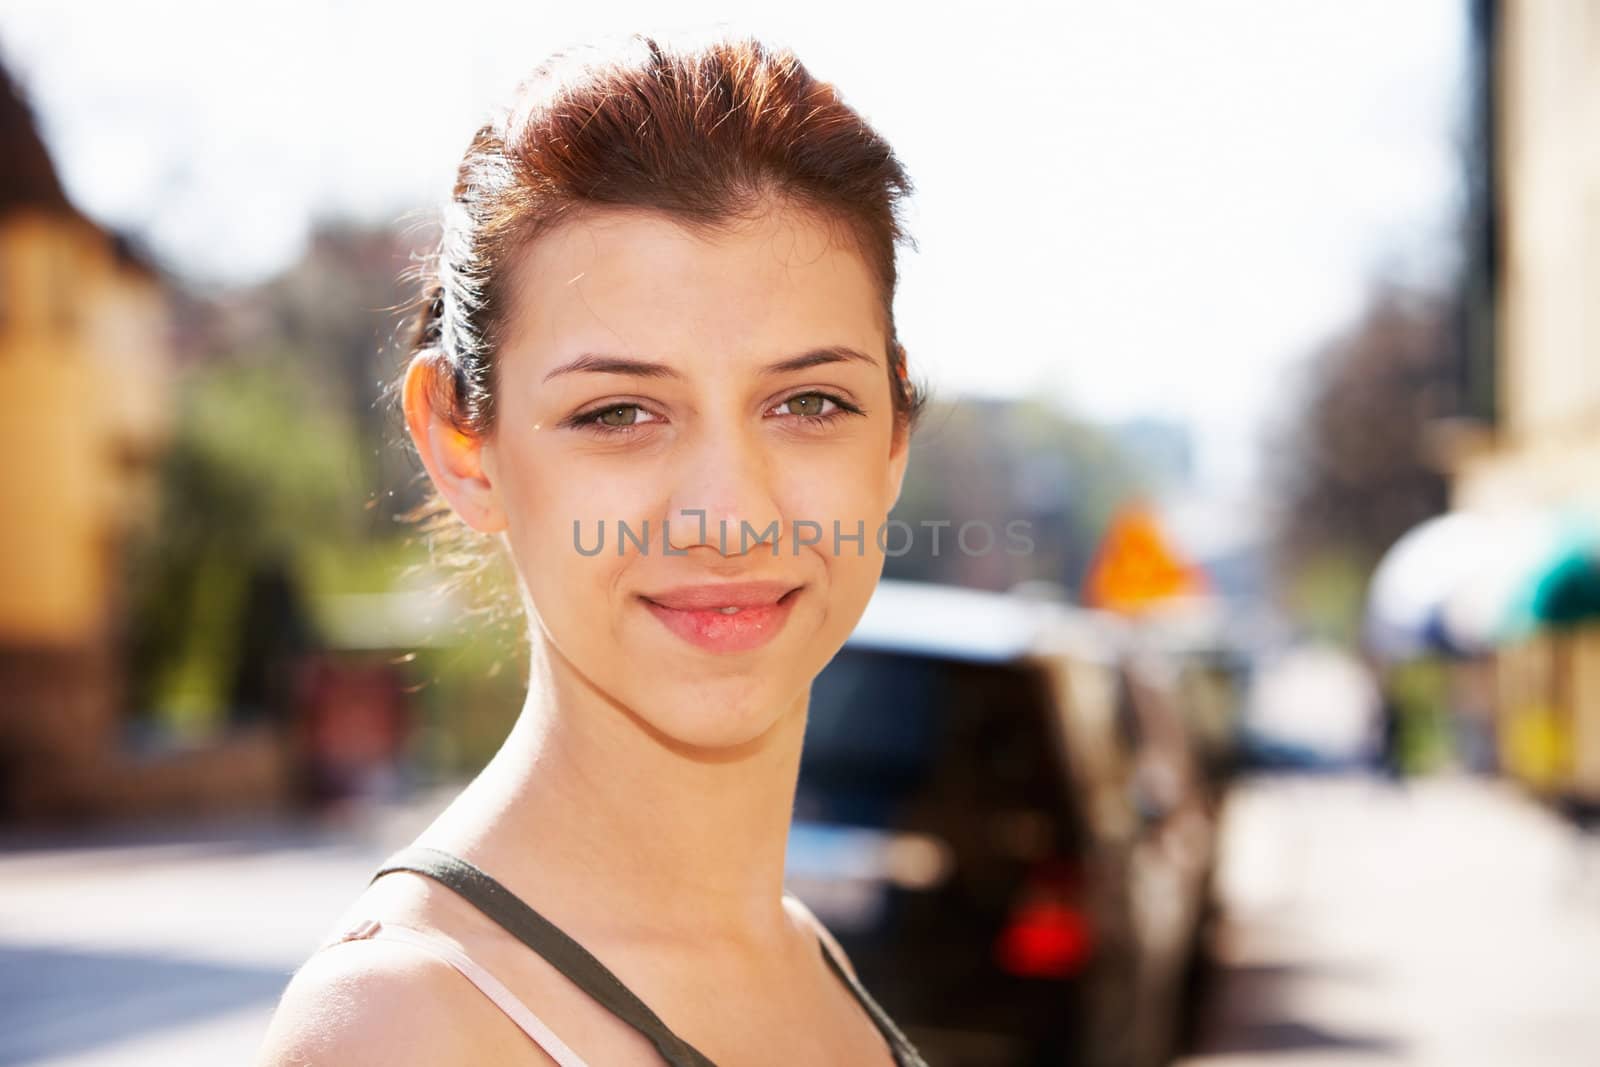 Teenage girl in street looking at camera, close-up